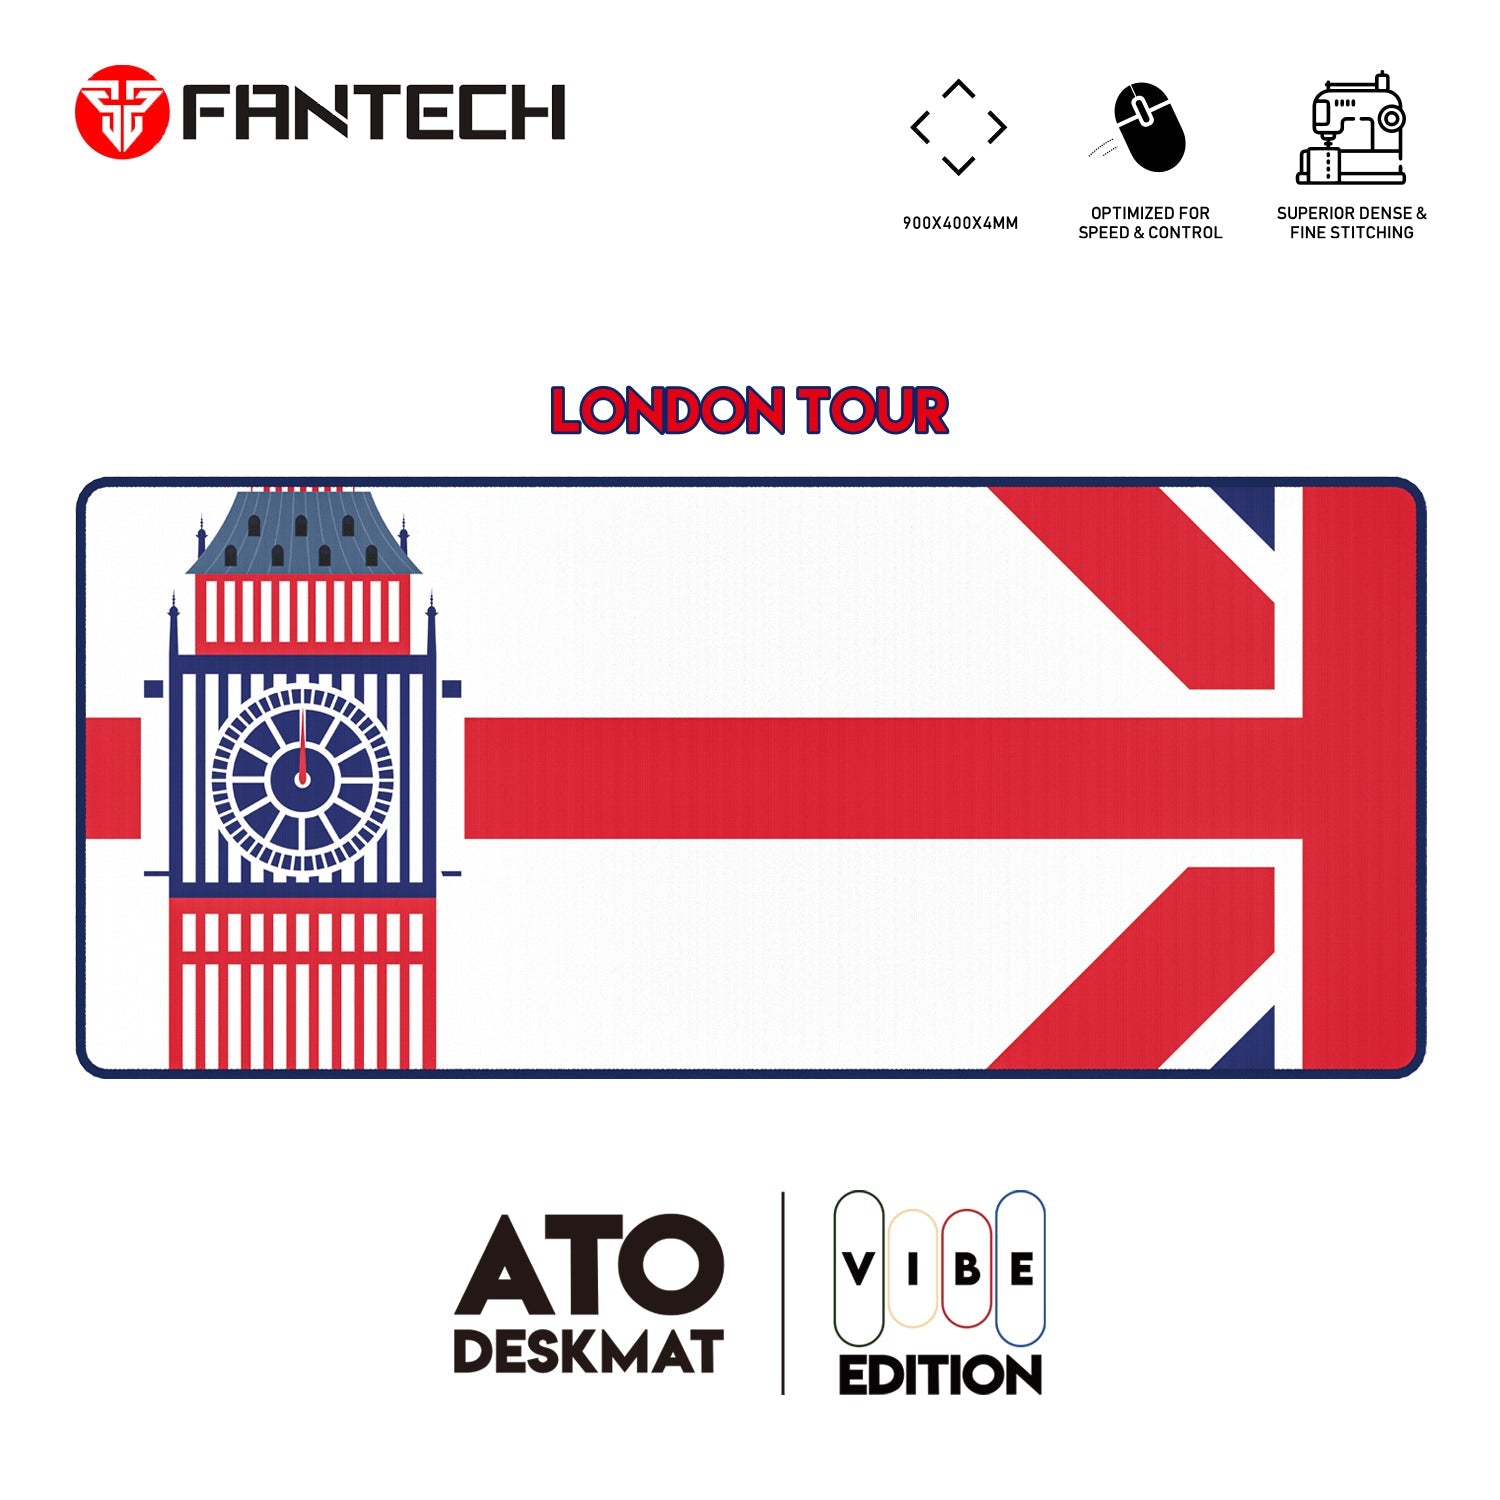 Fantech ATO MP905 Desk Mat VIBE EDTION London Tour JOD 15